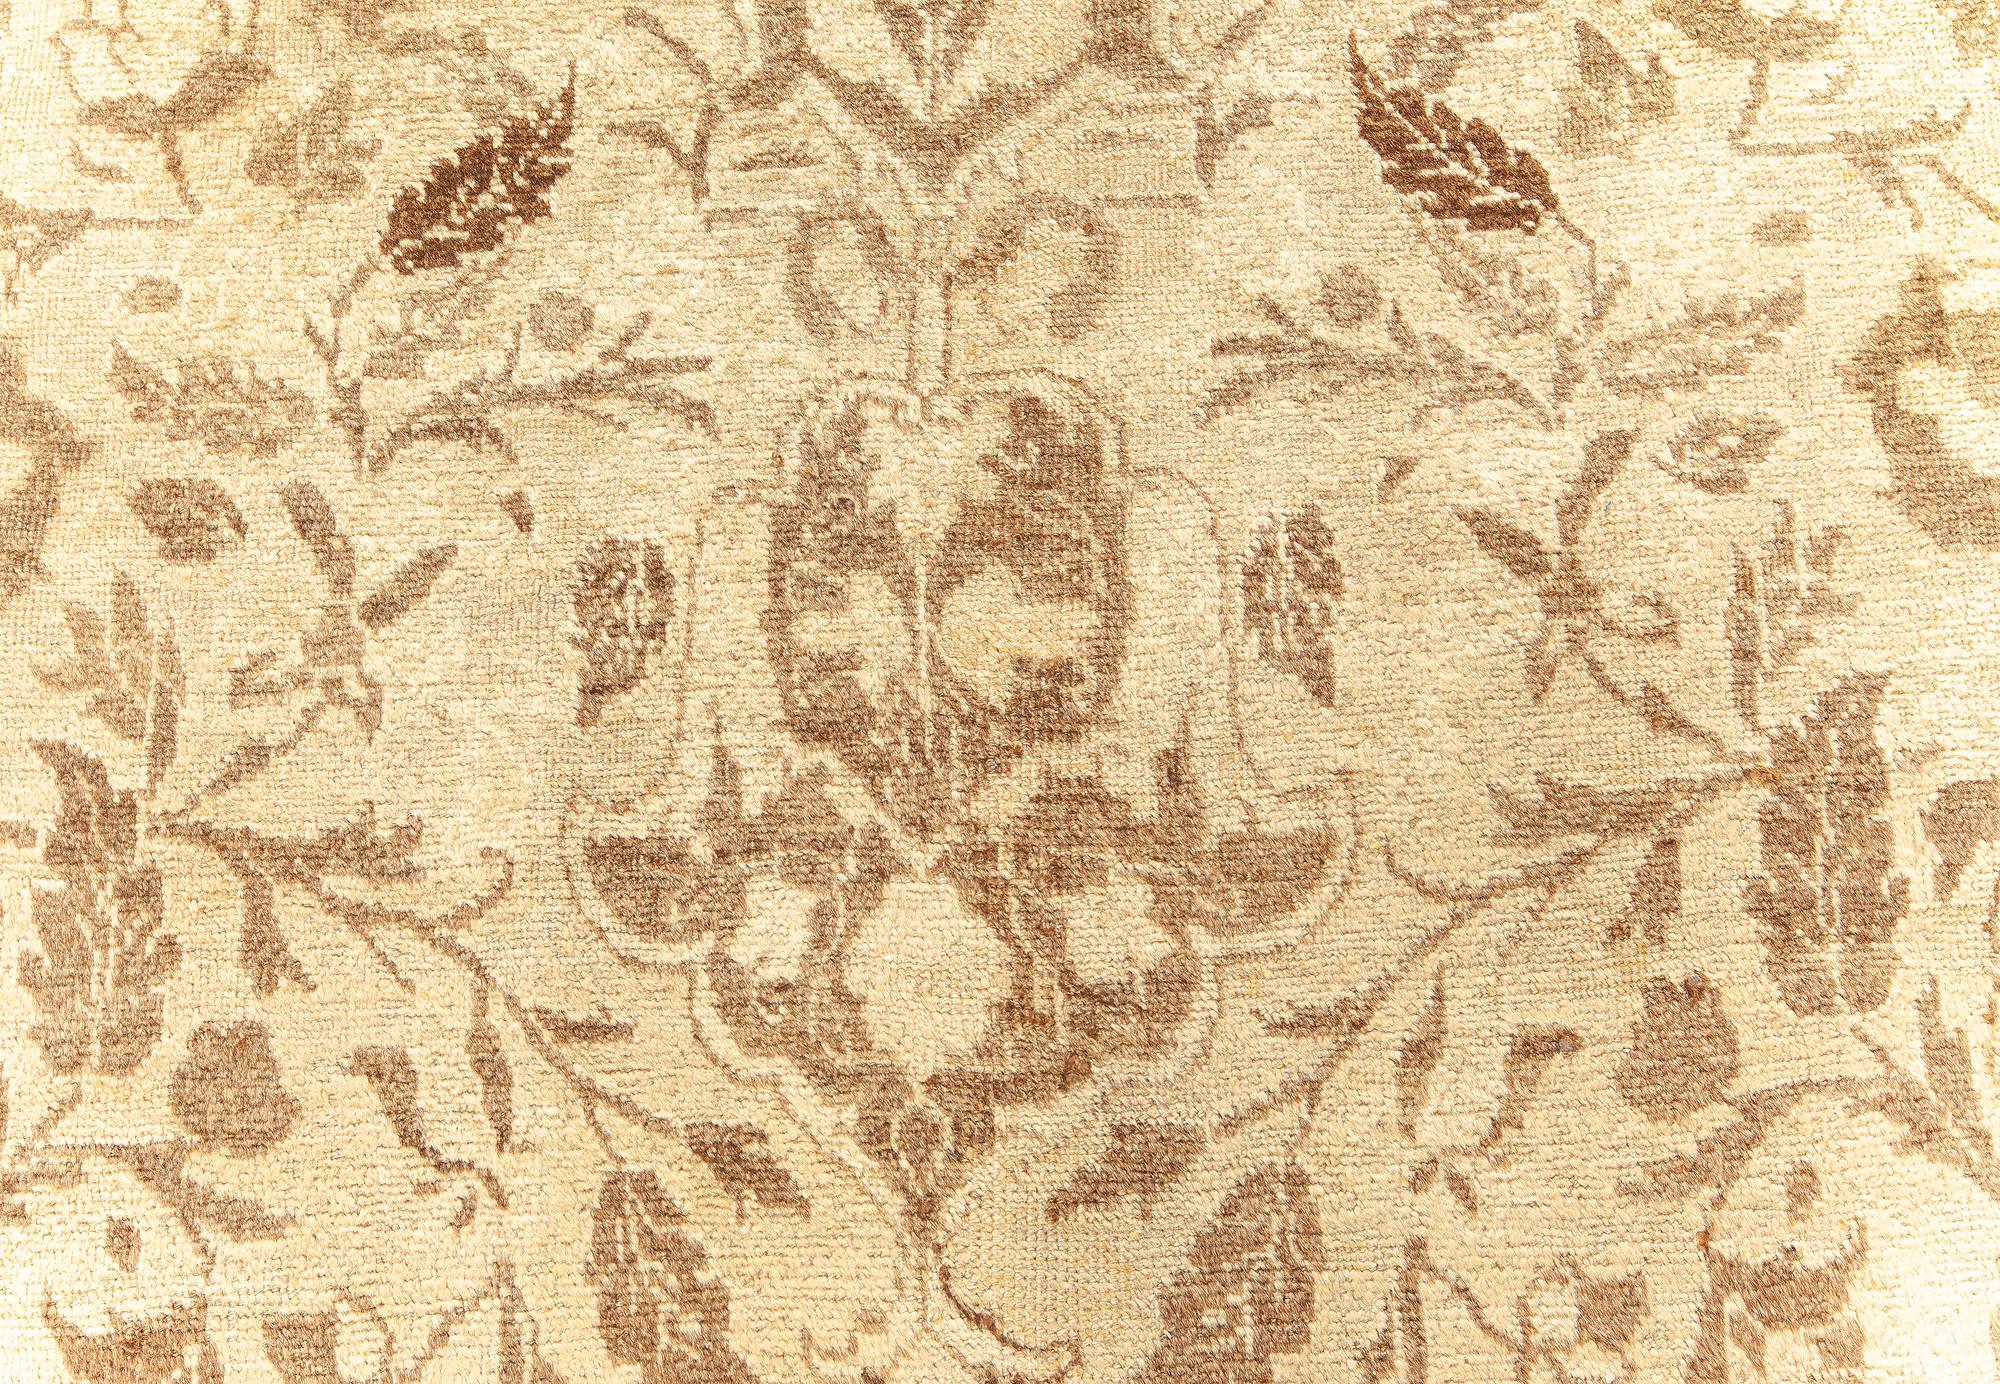 Authentic Persian Tabriz brown handmade wool carpet
Size: 12'9